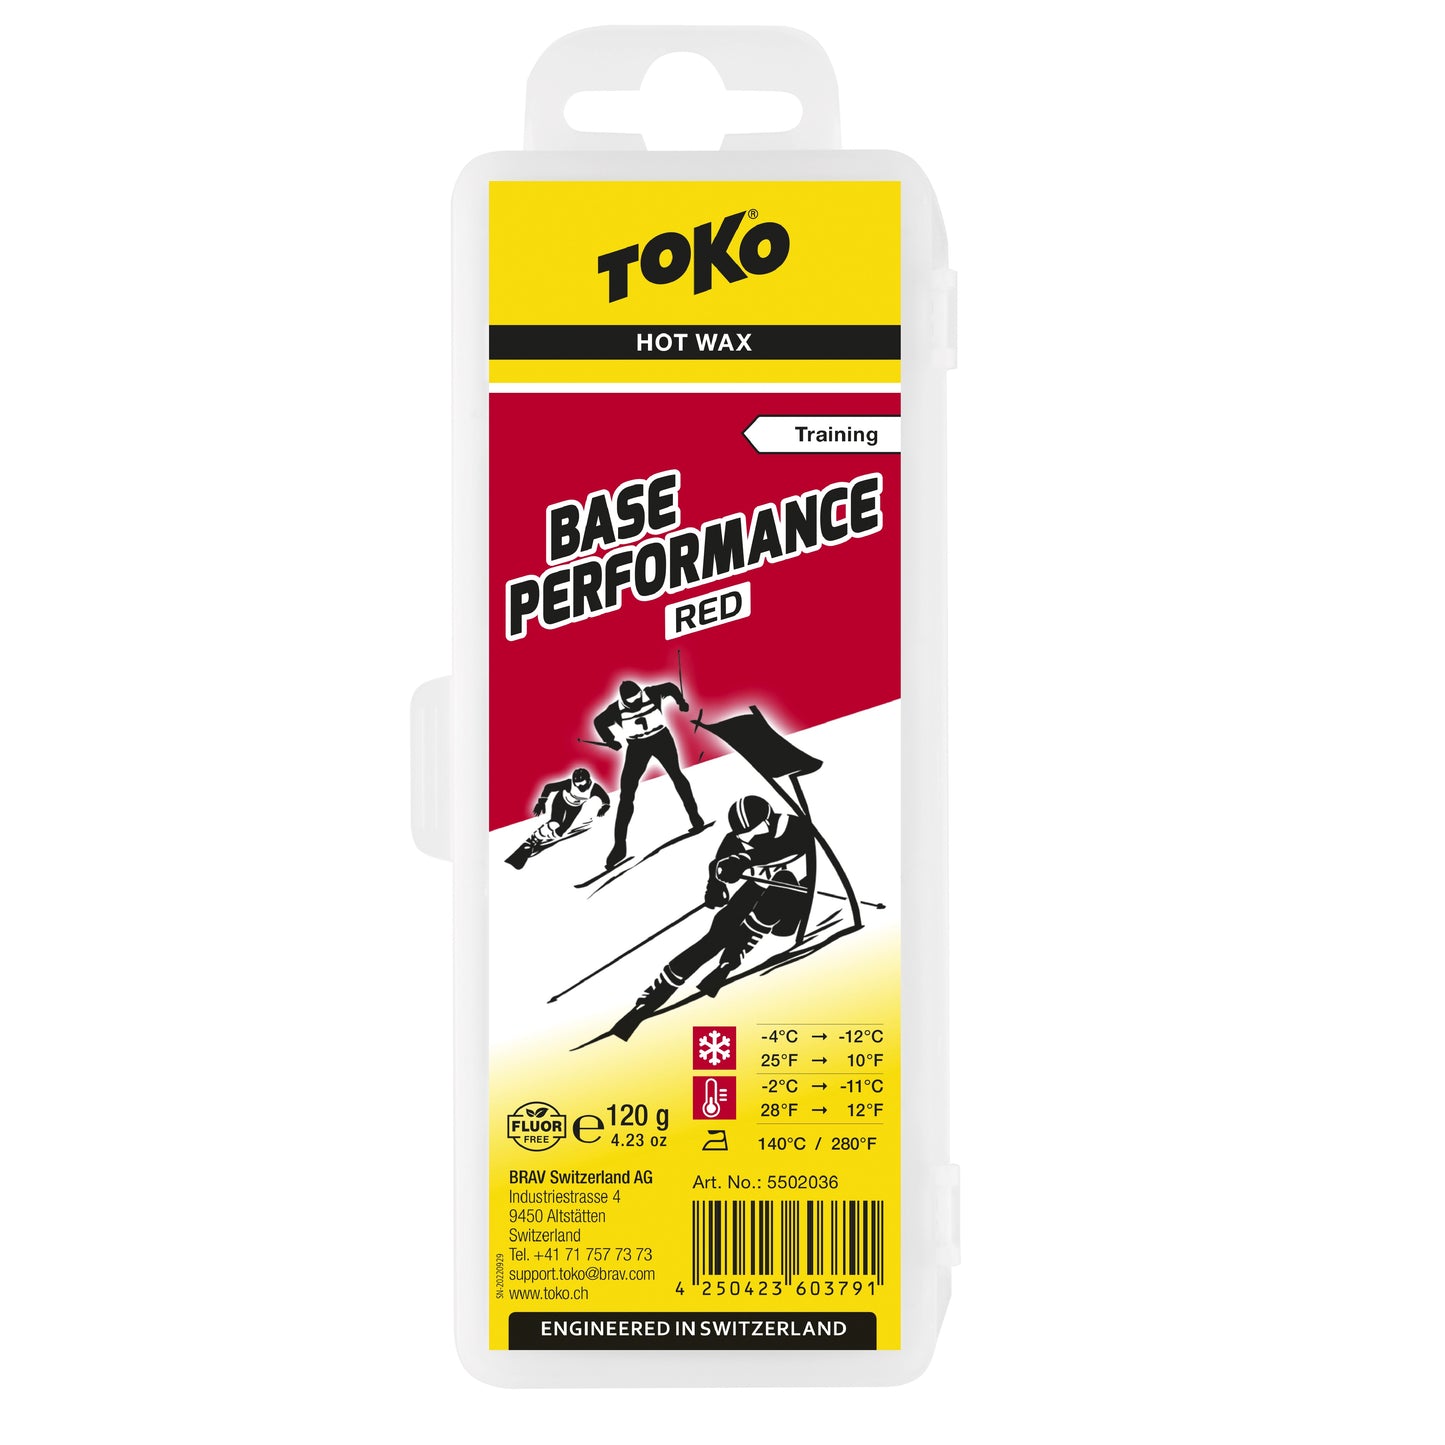 Toko vasks Base Performance Hot Wax Red 120g